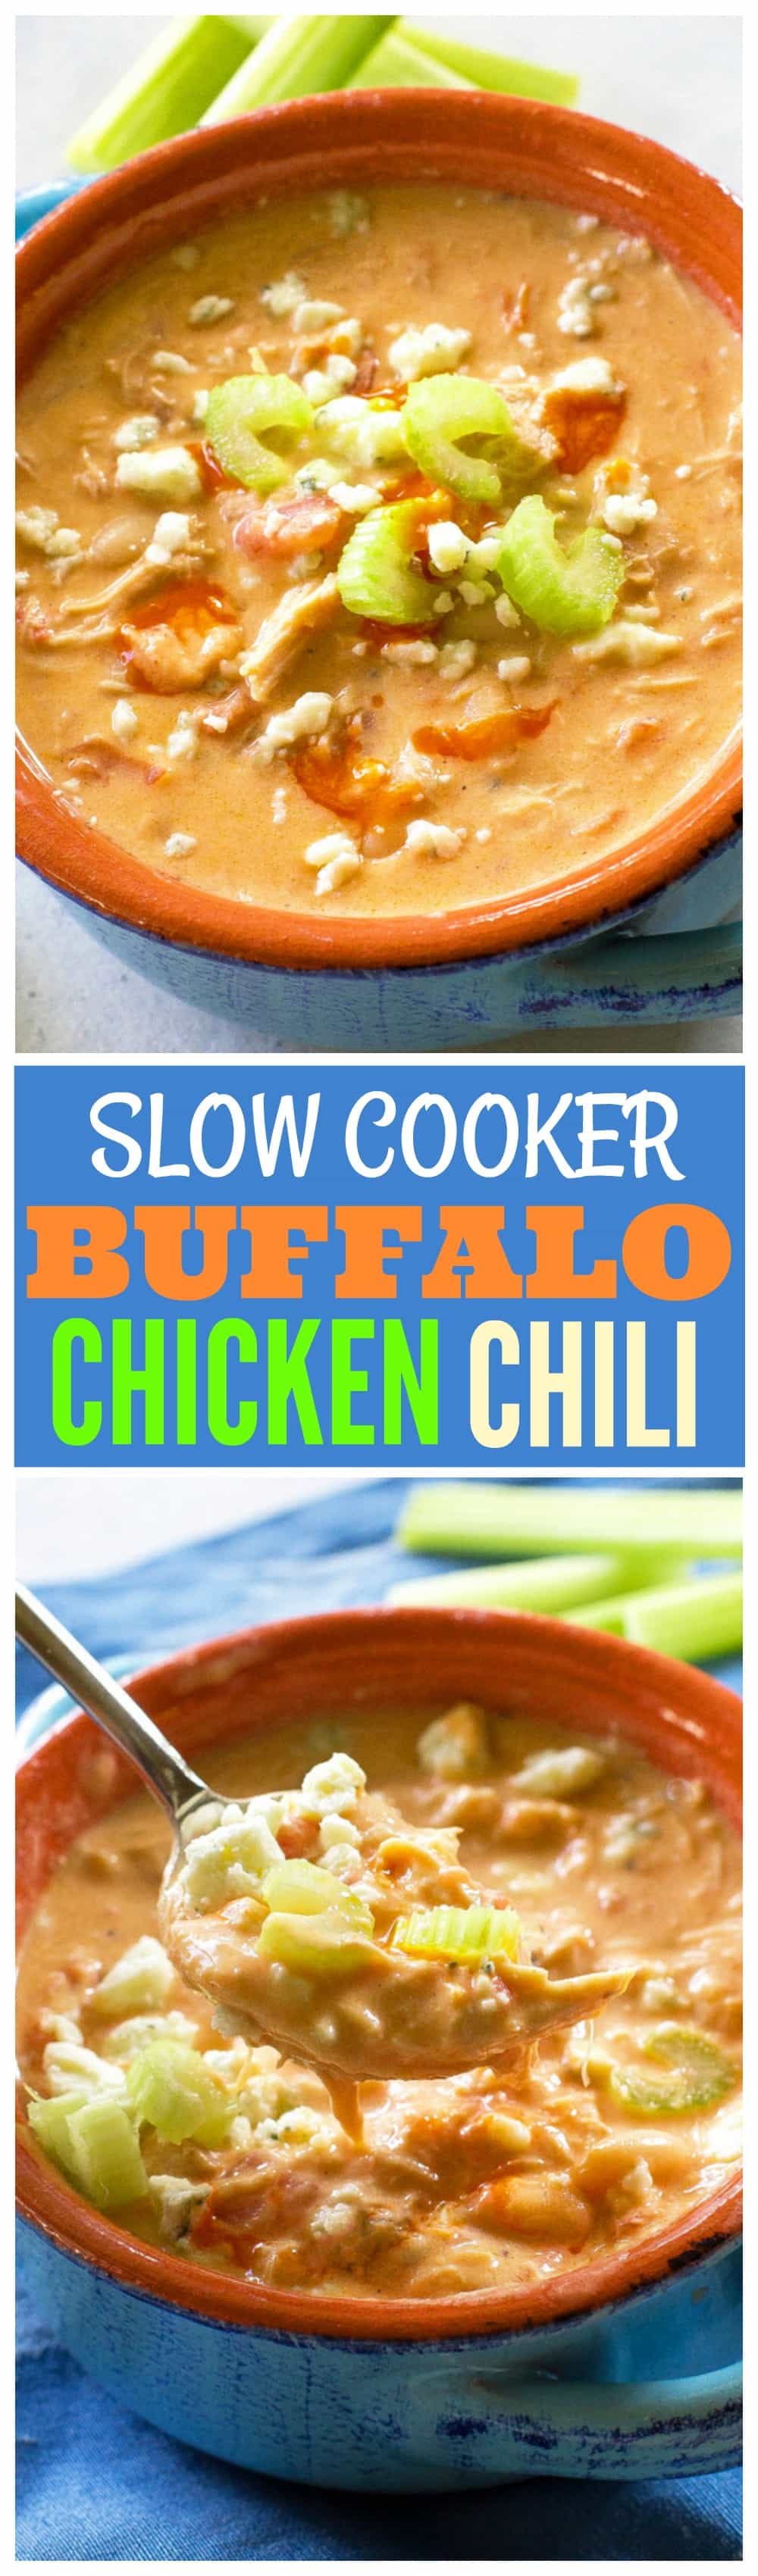 Slow Cooker Buffalo Chicken Chowder - apenas cinco ingredientes neste jantar de fogão lento.  #buffalo #frango #chili #sopa #slowcooker #crockpot #receita #jantar 